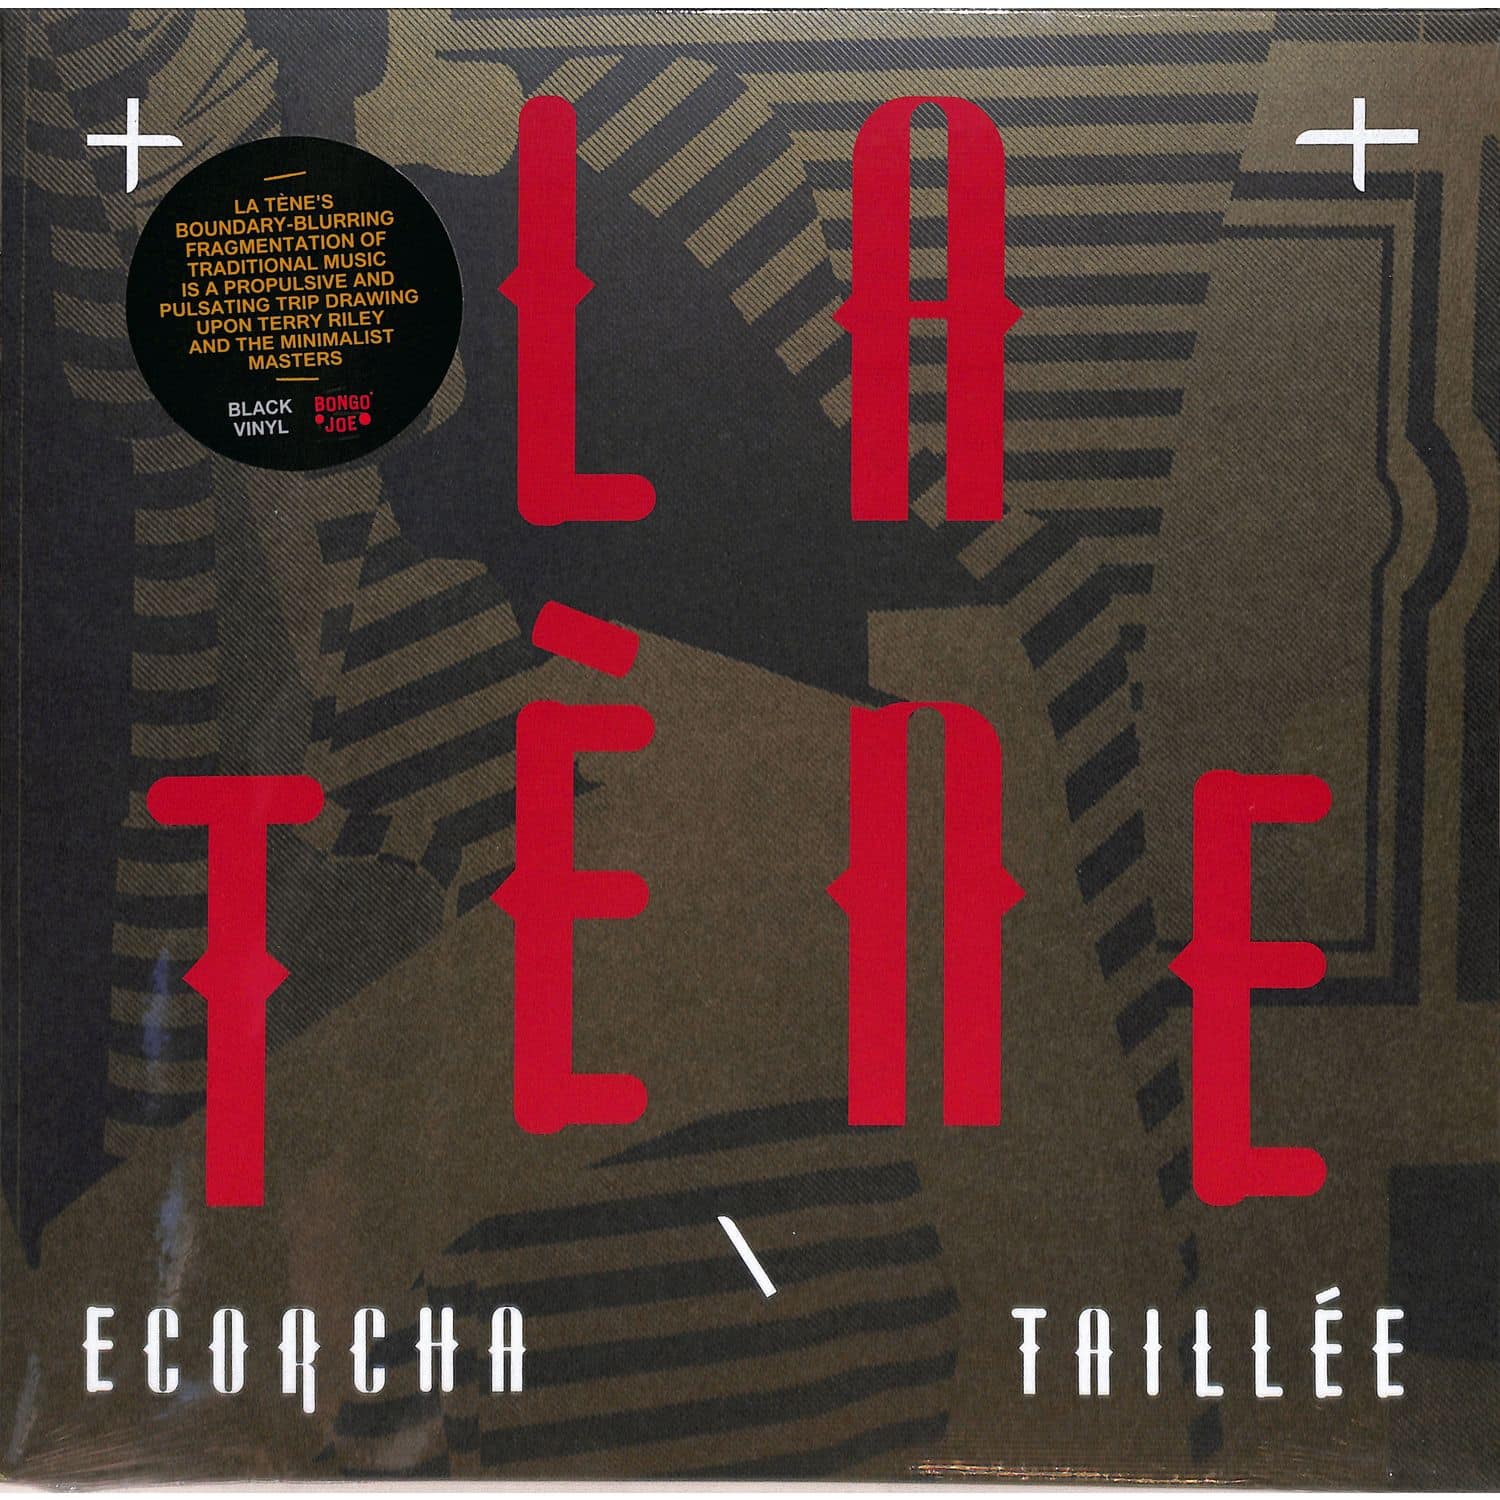 La Tene - ECORCHA / TAILLEE 